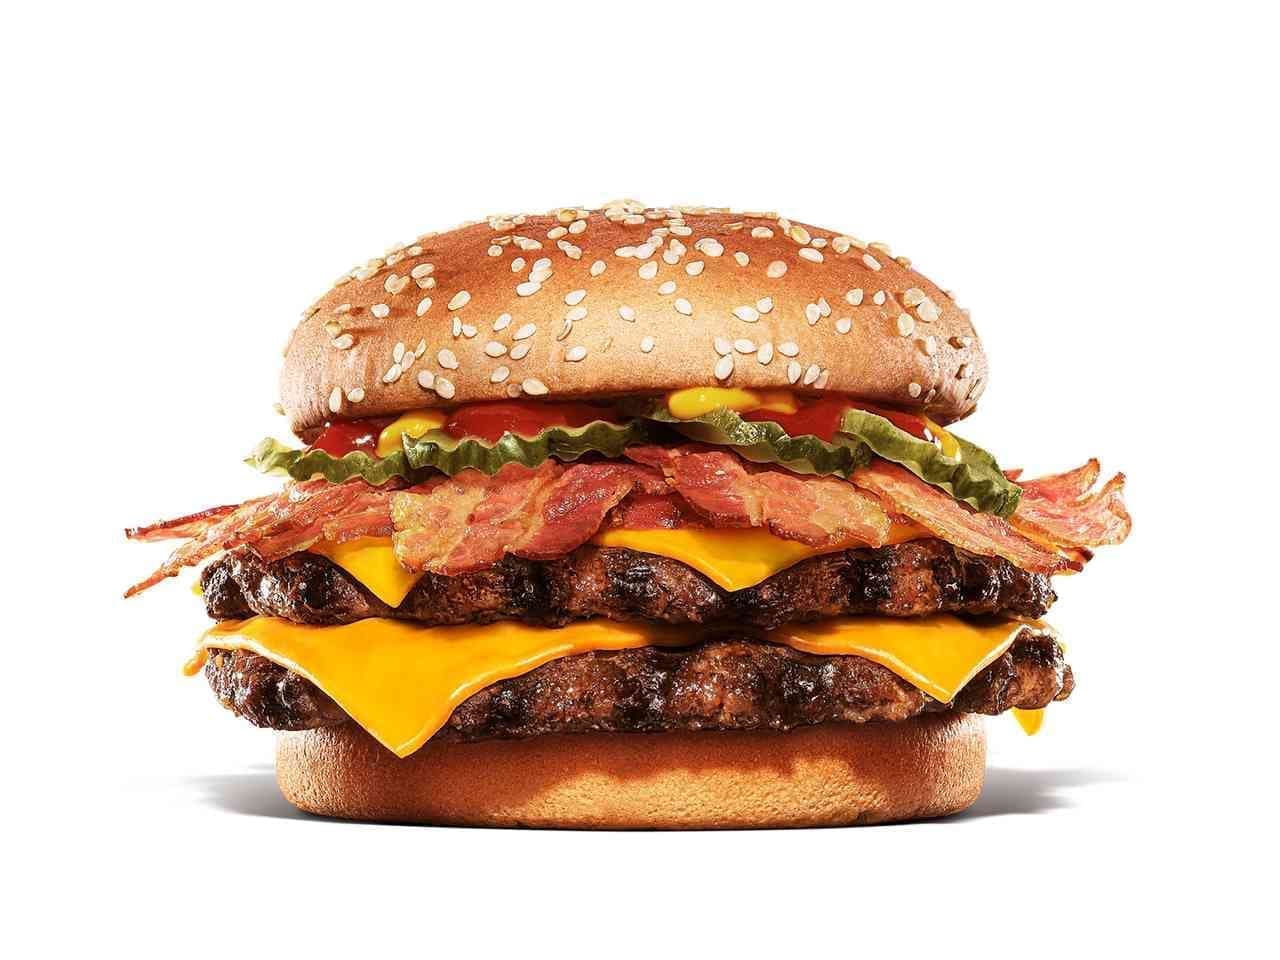 Burger King "Bacon Booster Big Mouth Burger